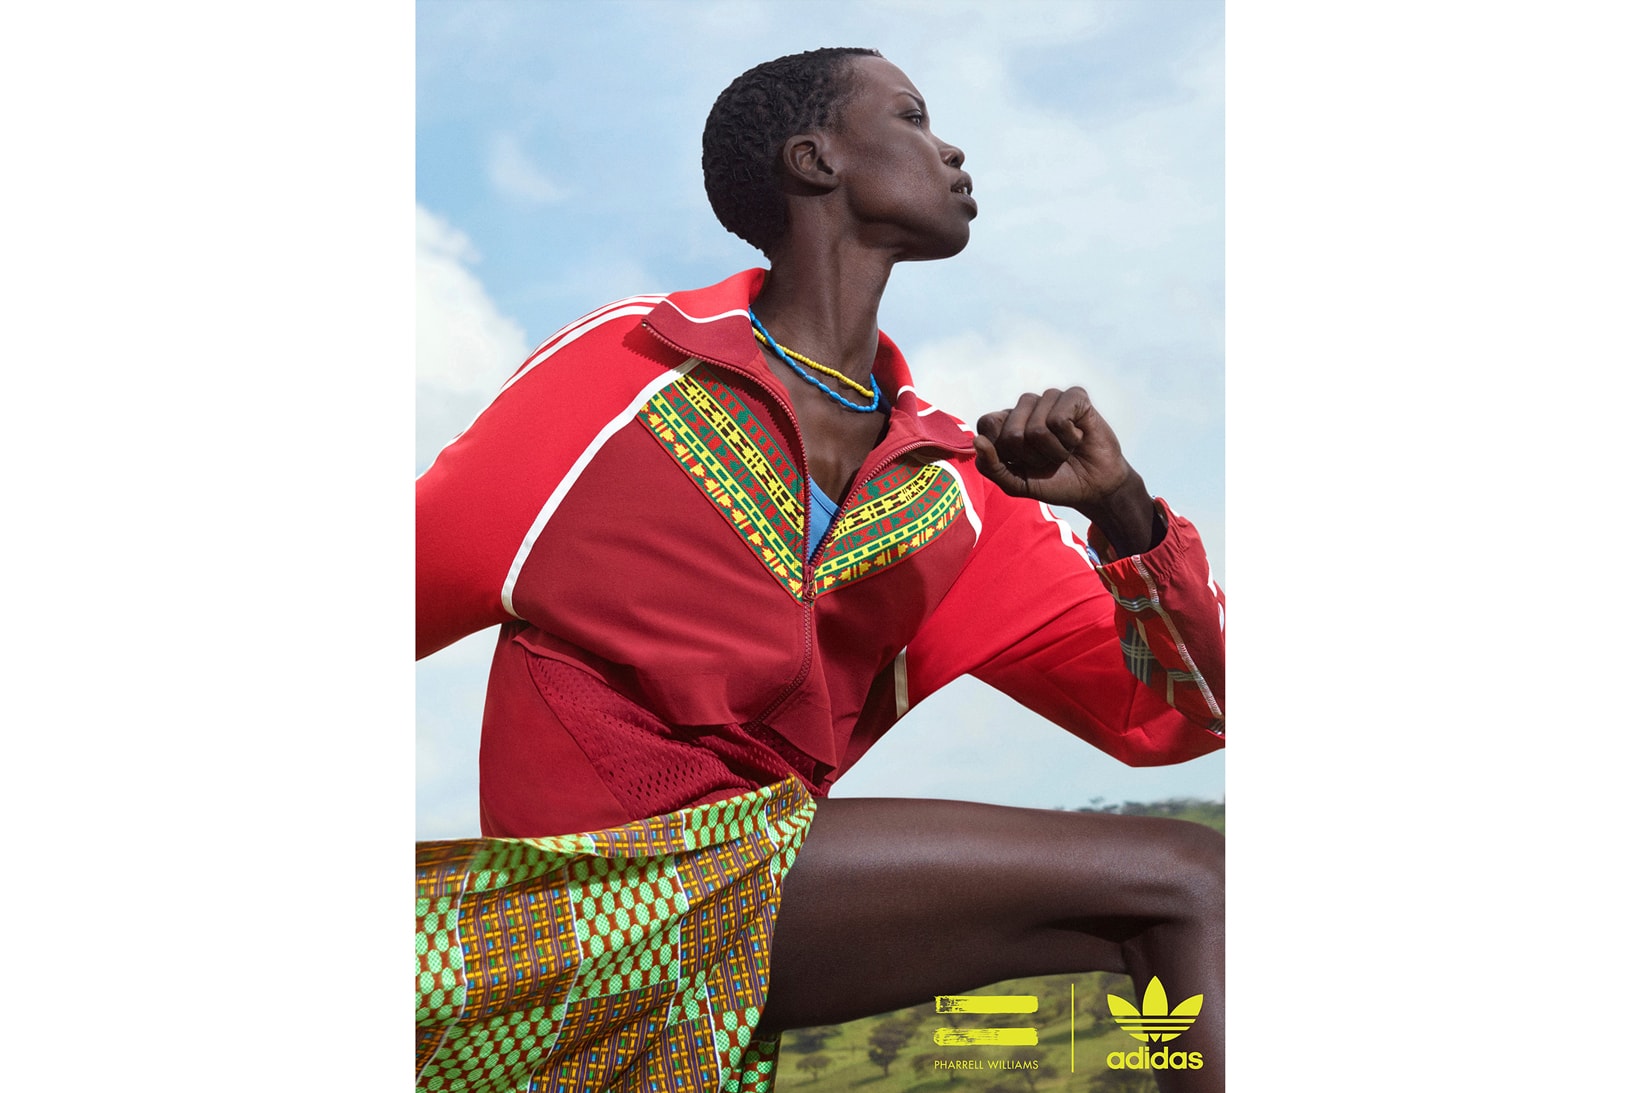 East African Motifs Inspire Pharrell Williams adidas SOLARHU Capsule  Collection